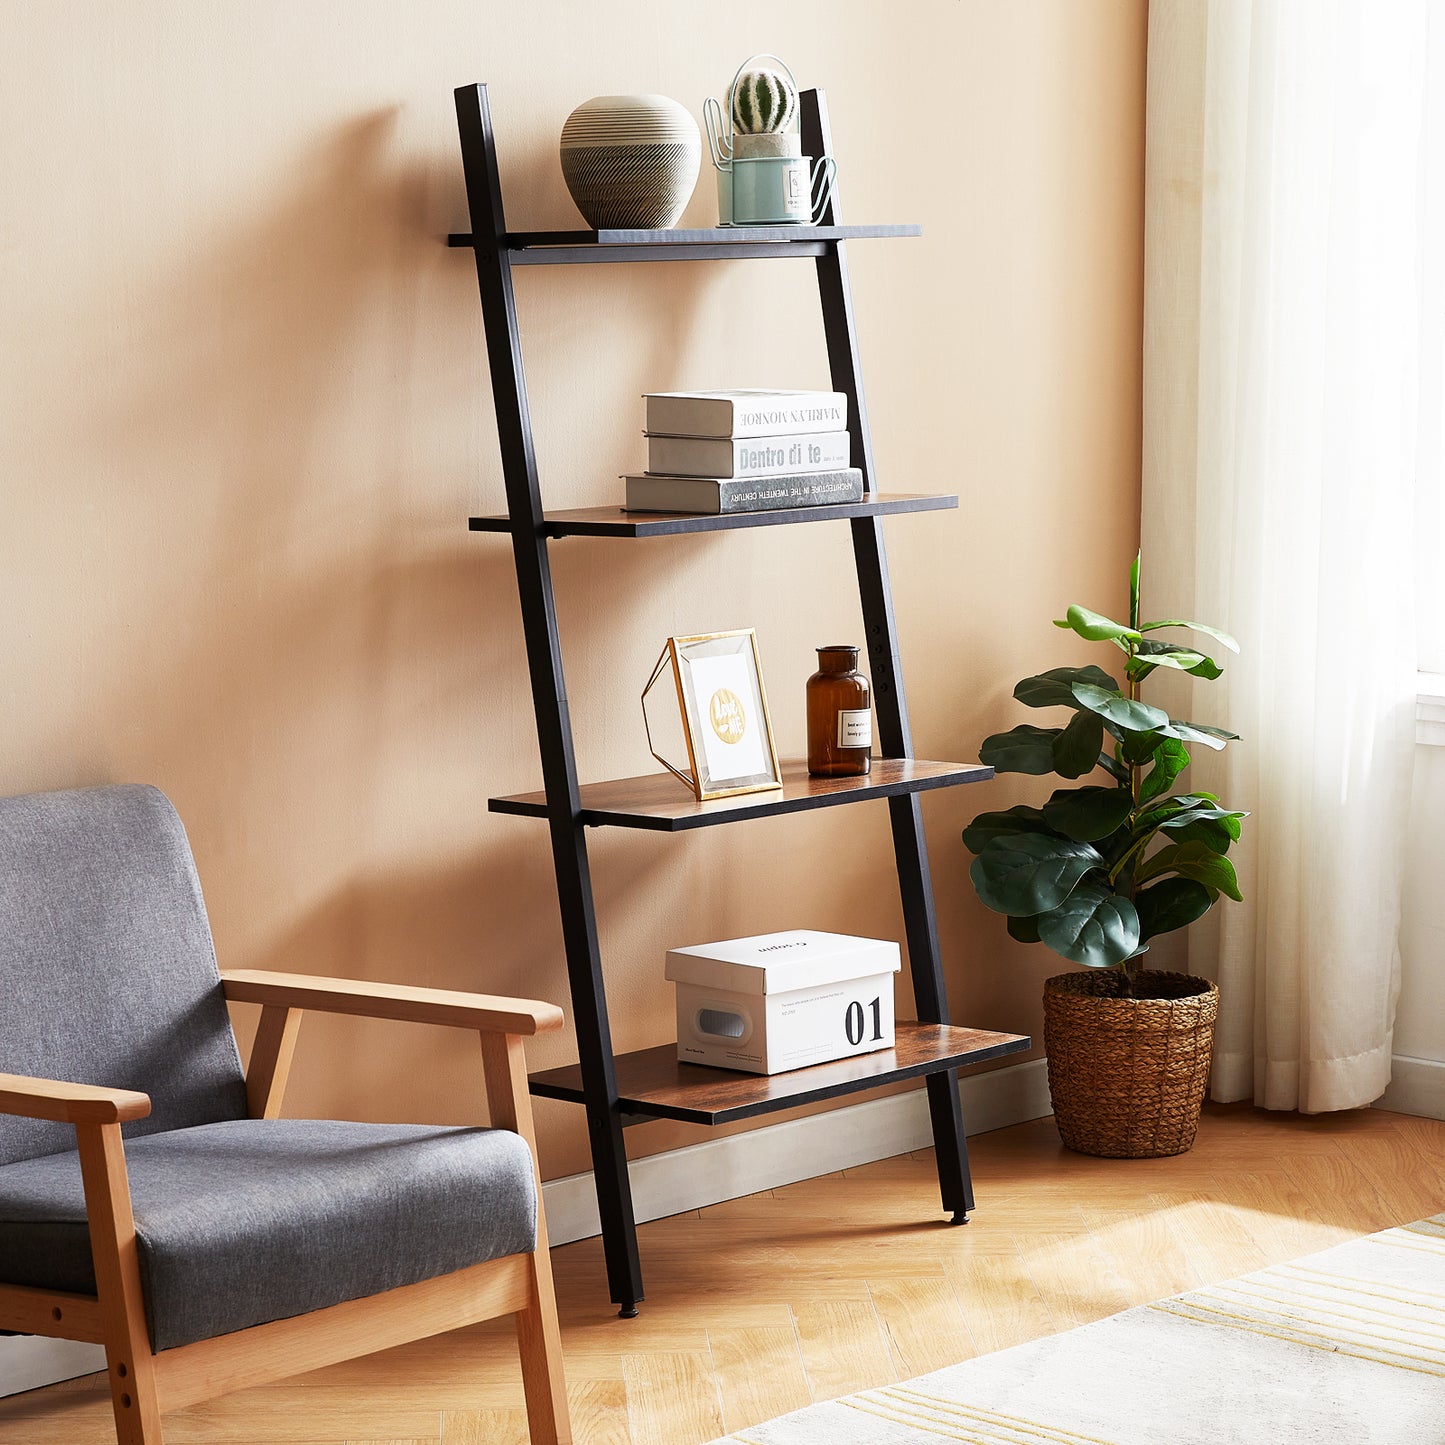 PAW Rustic Ladder Bookshelf, 4-Tier Ladder Shelf Standing Leaning Book Shelves - Rustic Brown